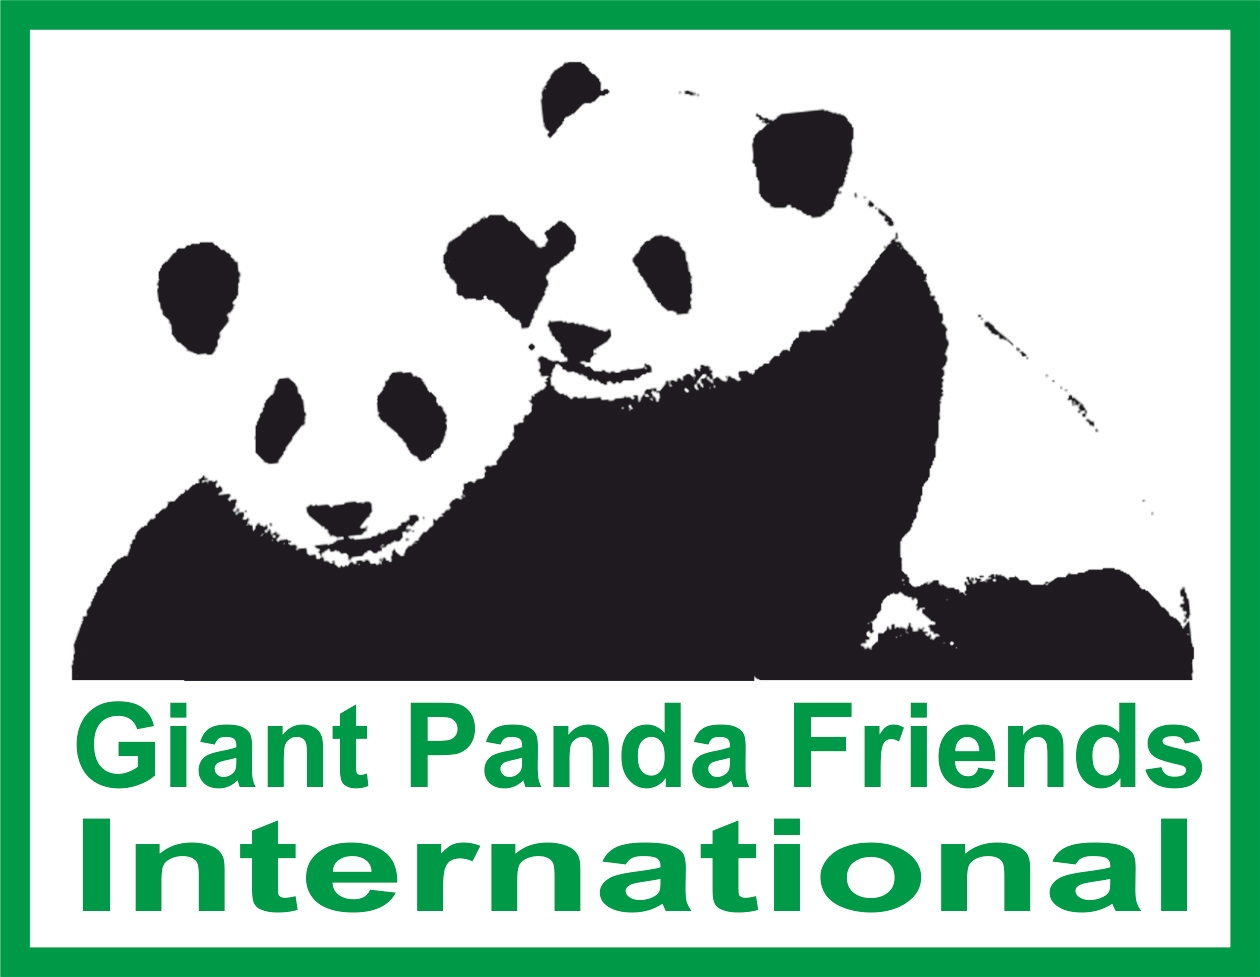 Giant Panda Friends International